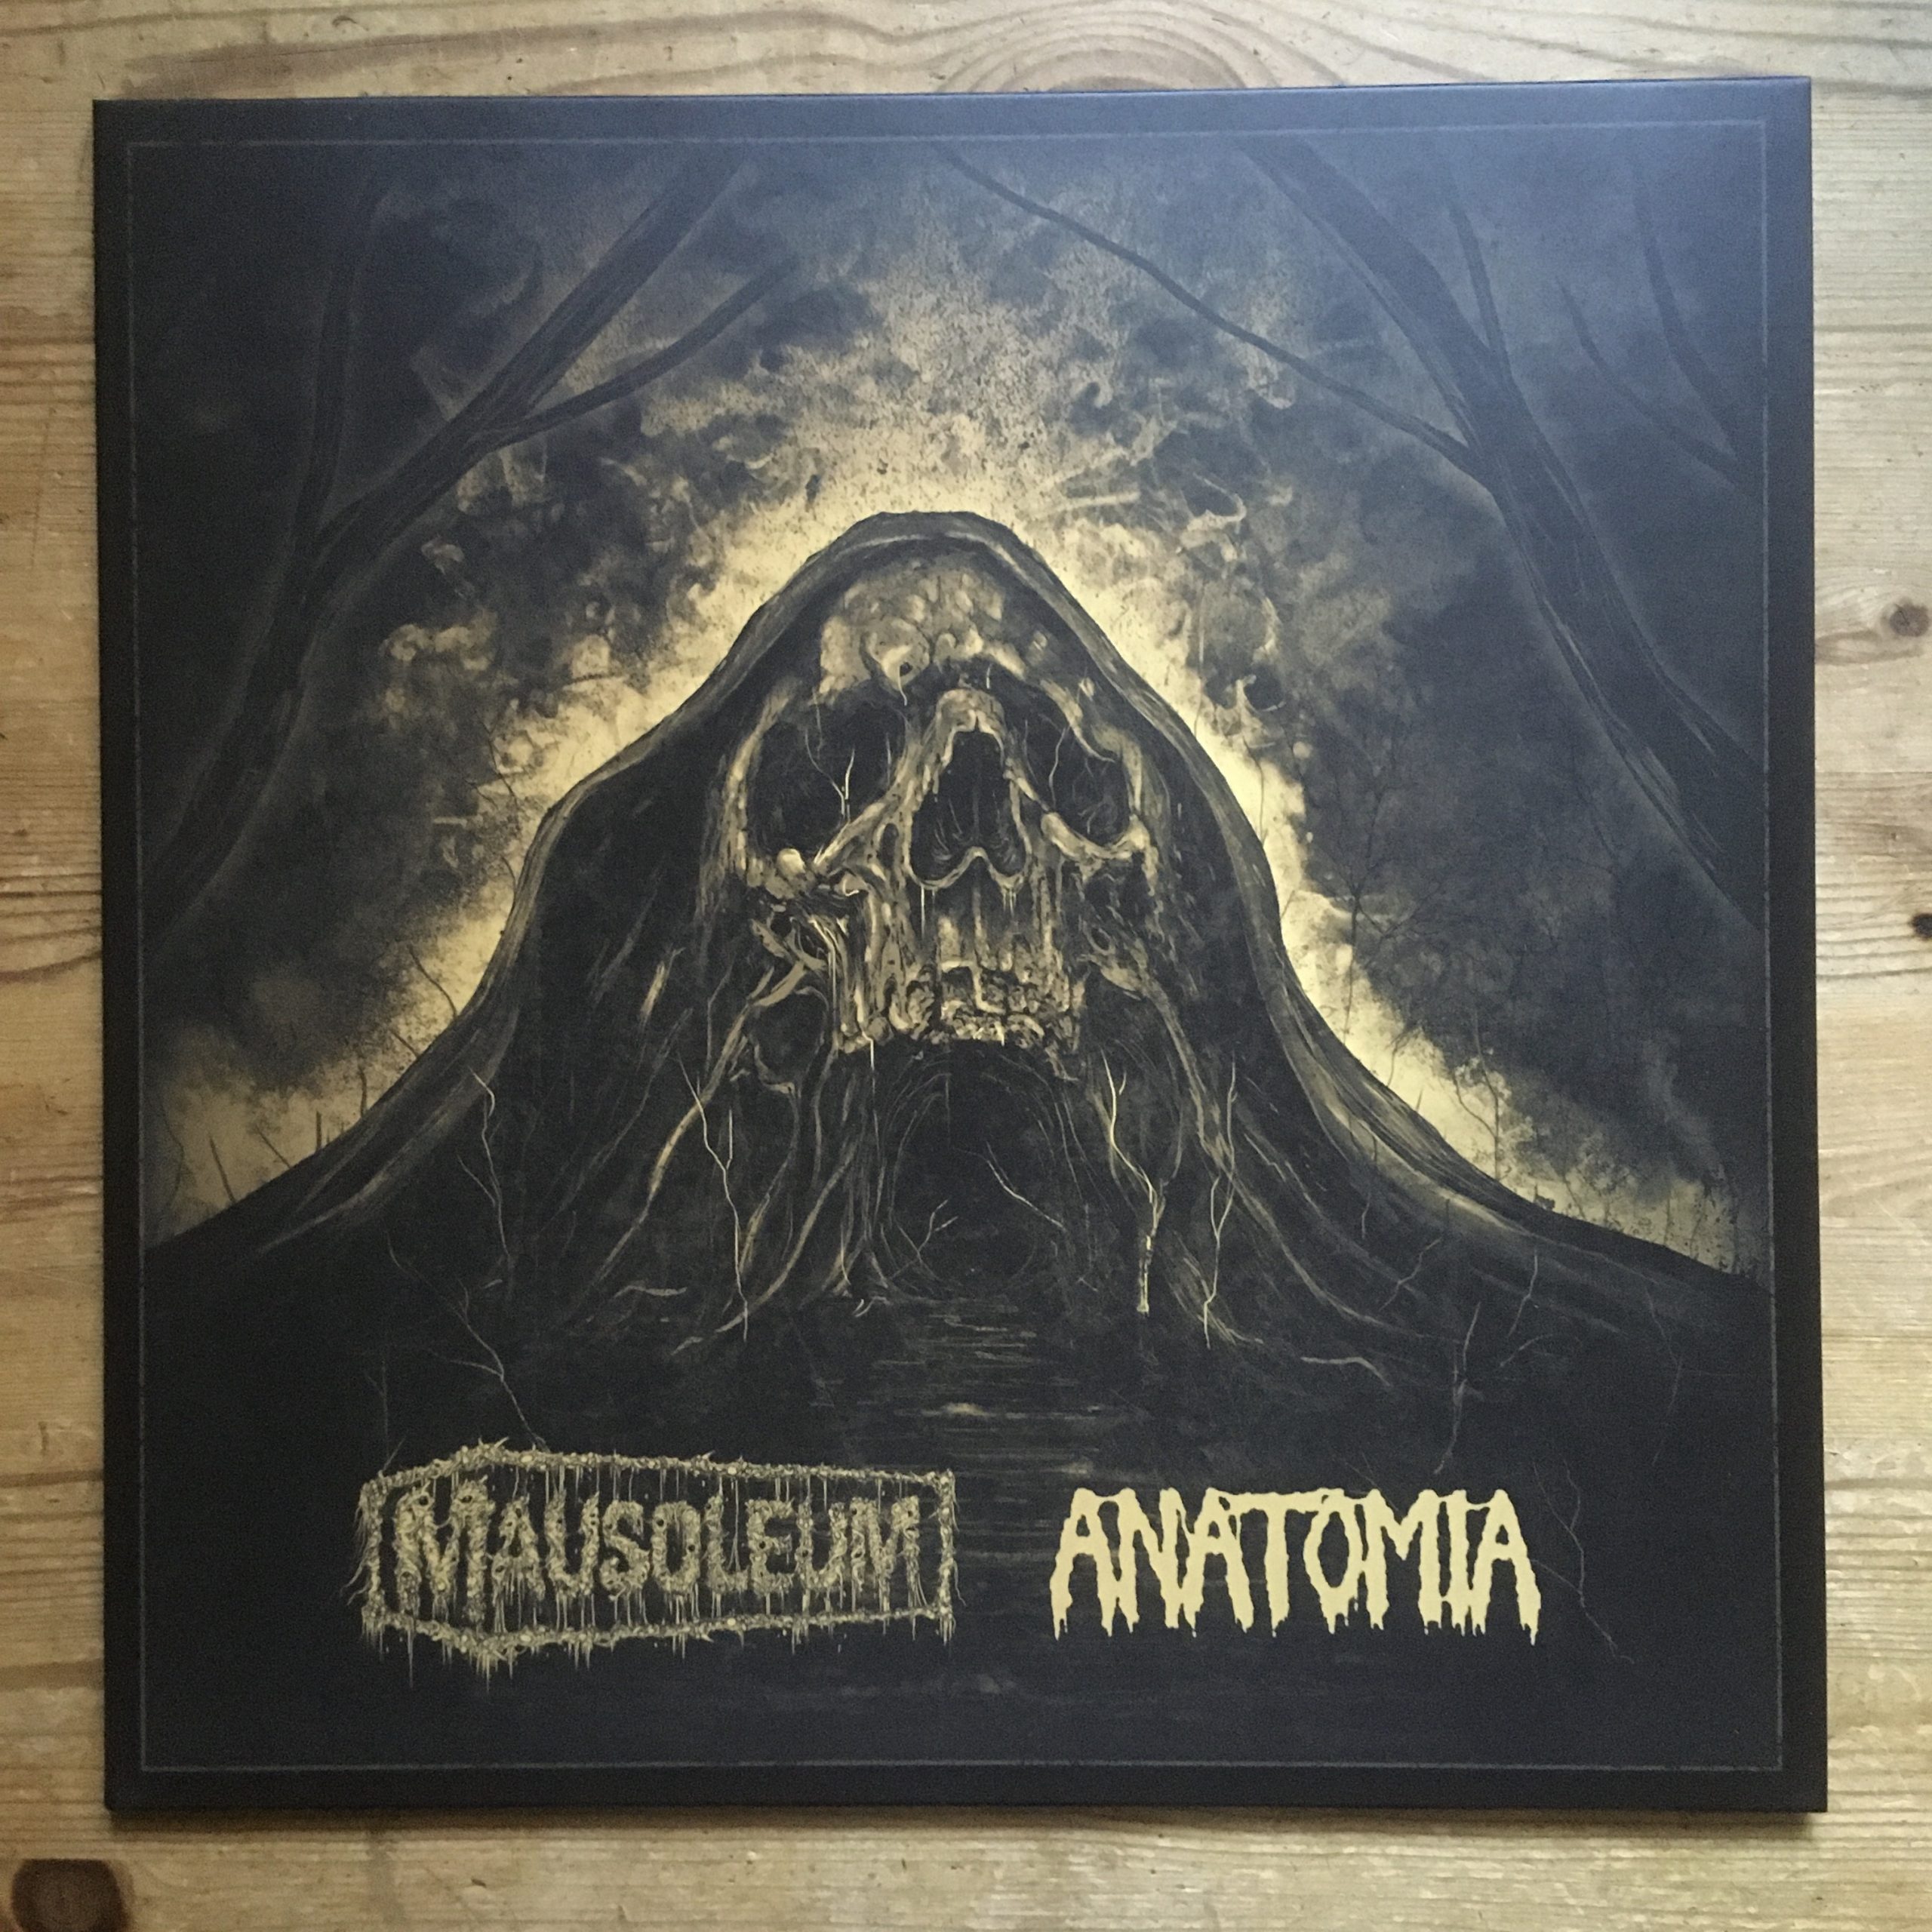 Photo of the Anatomia / Mausoleum - "Split" LP (Black vinyl)